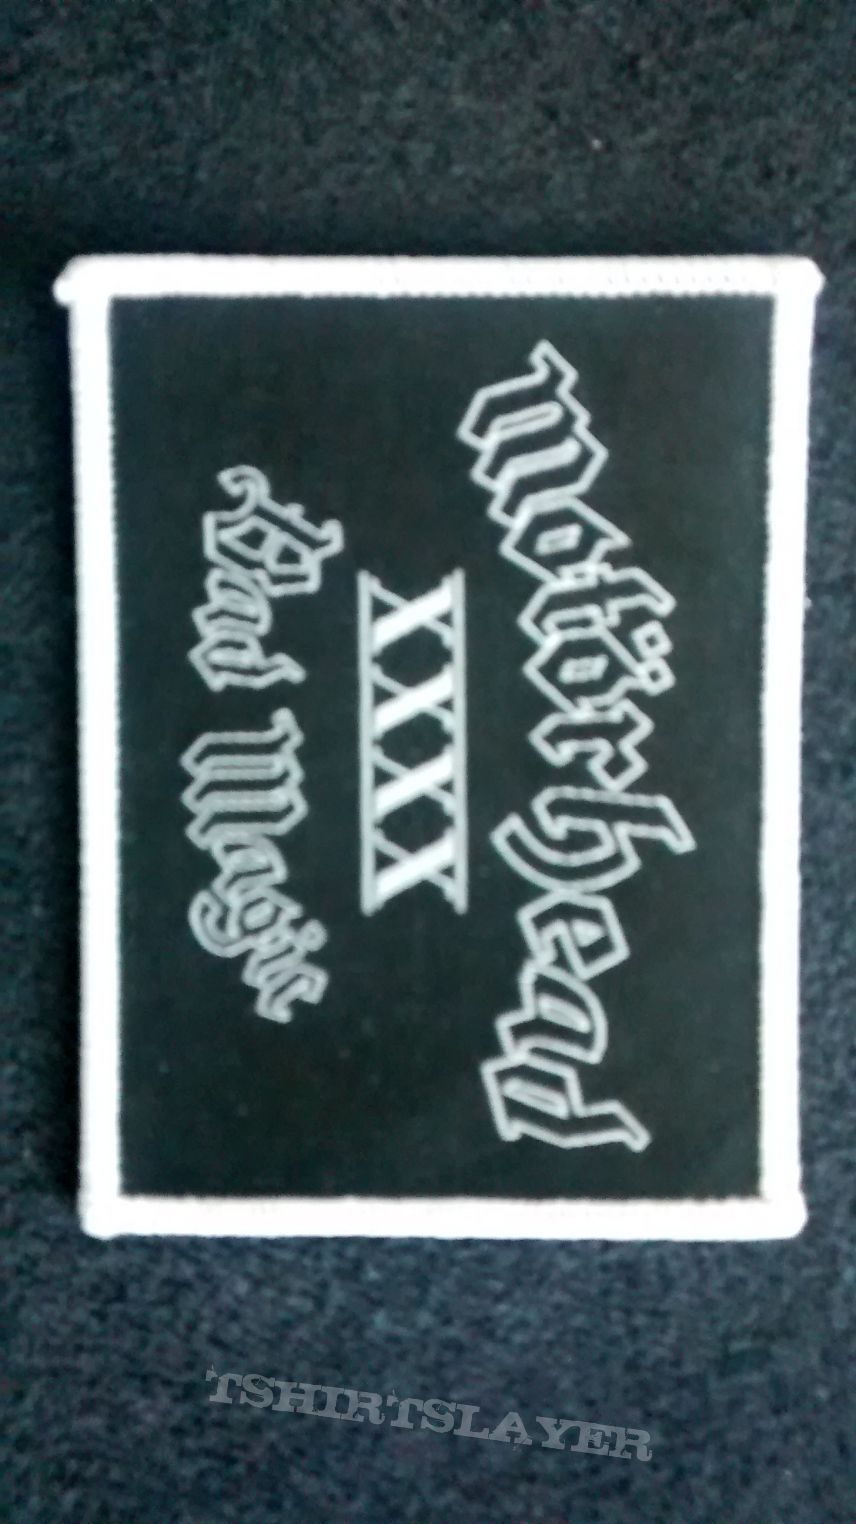 Motörhead 40th Anniversary Patch